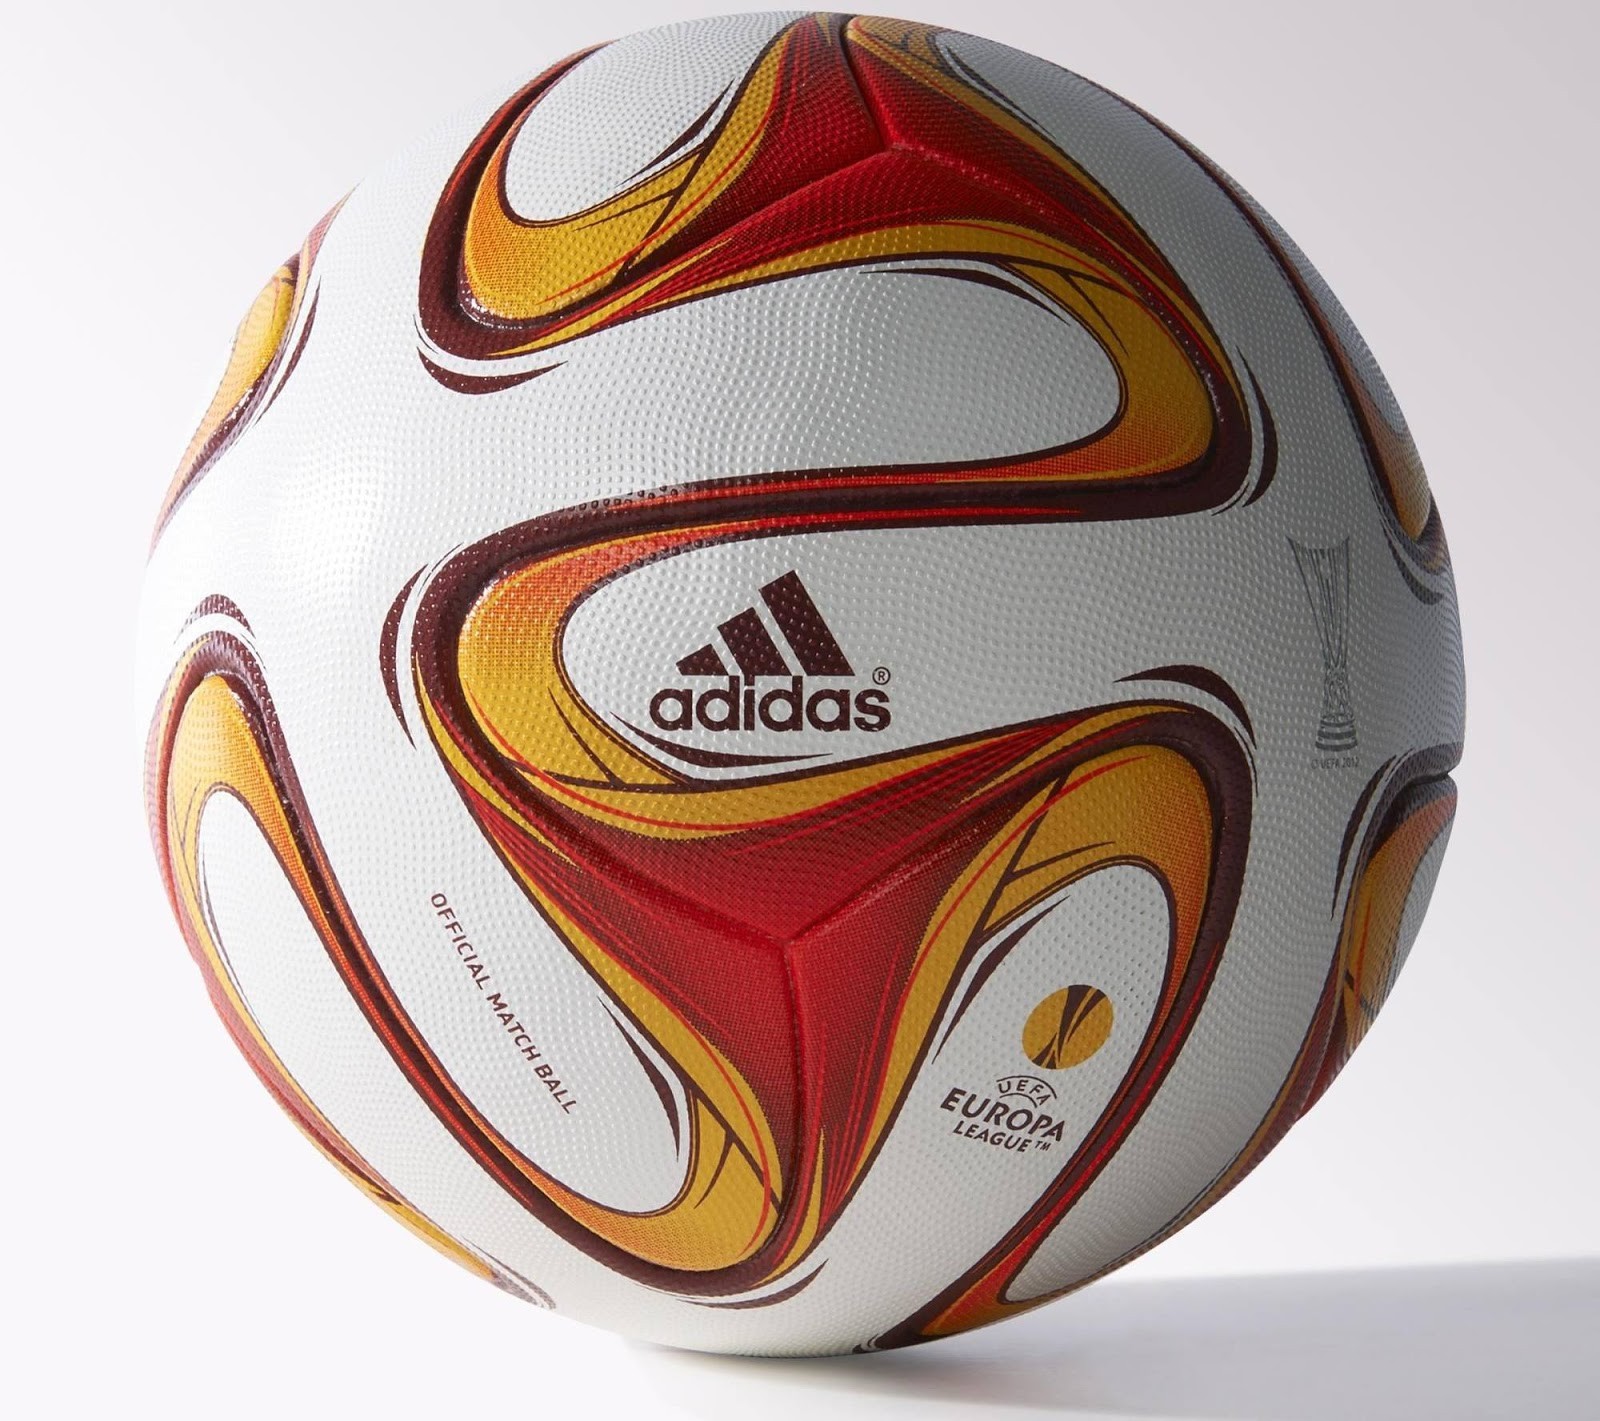 ADIDAS UEFA 2012 Football Ball